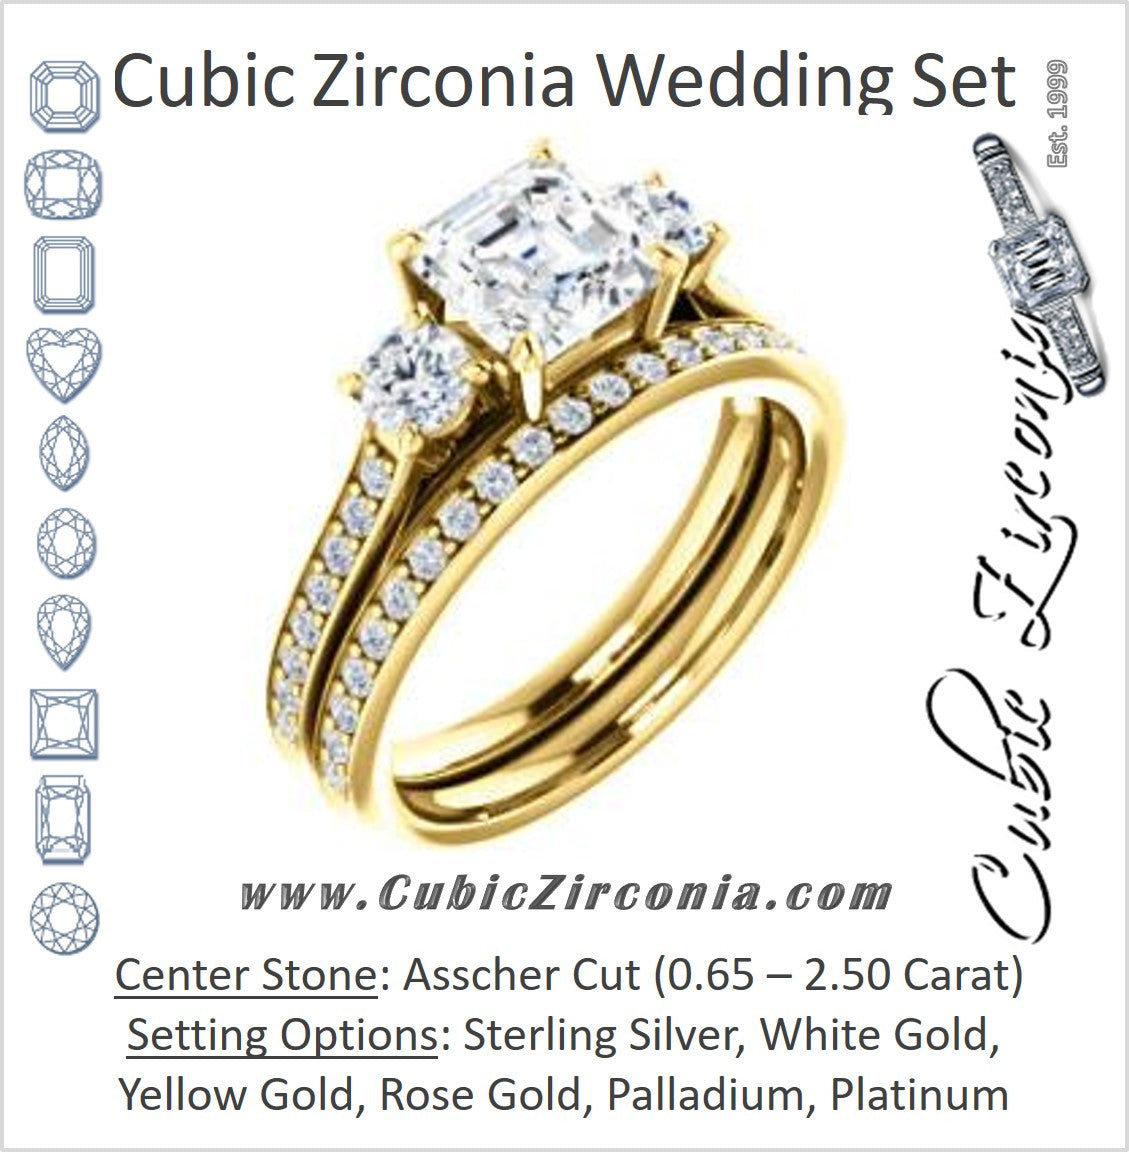 CZ Wedding Set, featuring The Tess engagement ring (Customizable Asscher Cut Trellis-Enhanced Bridge Setting with Semi-Pavé Band)